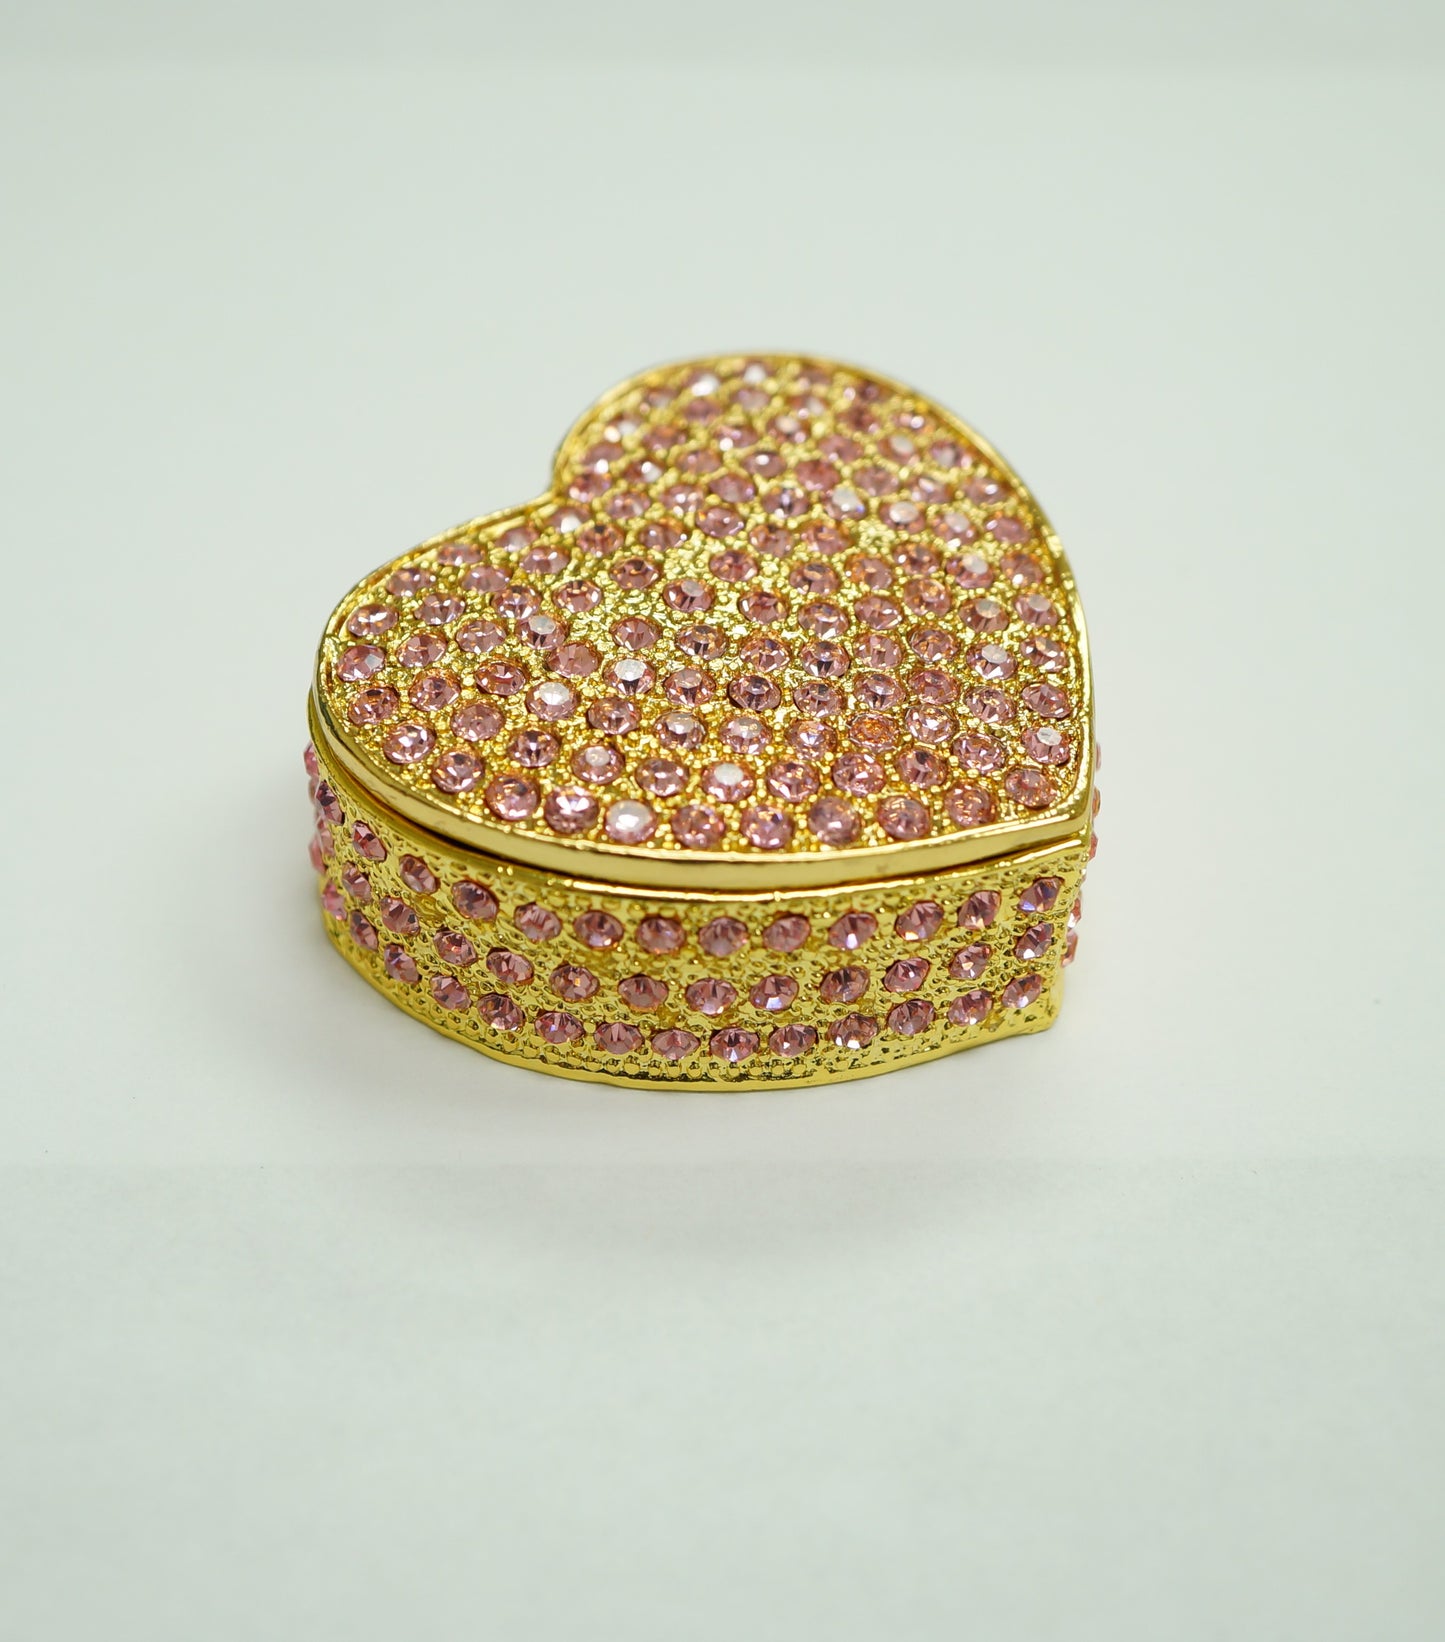 Cristiani Collezione Gold Pink Crystal Heart Trinket Box.